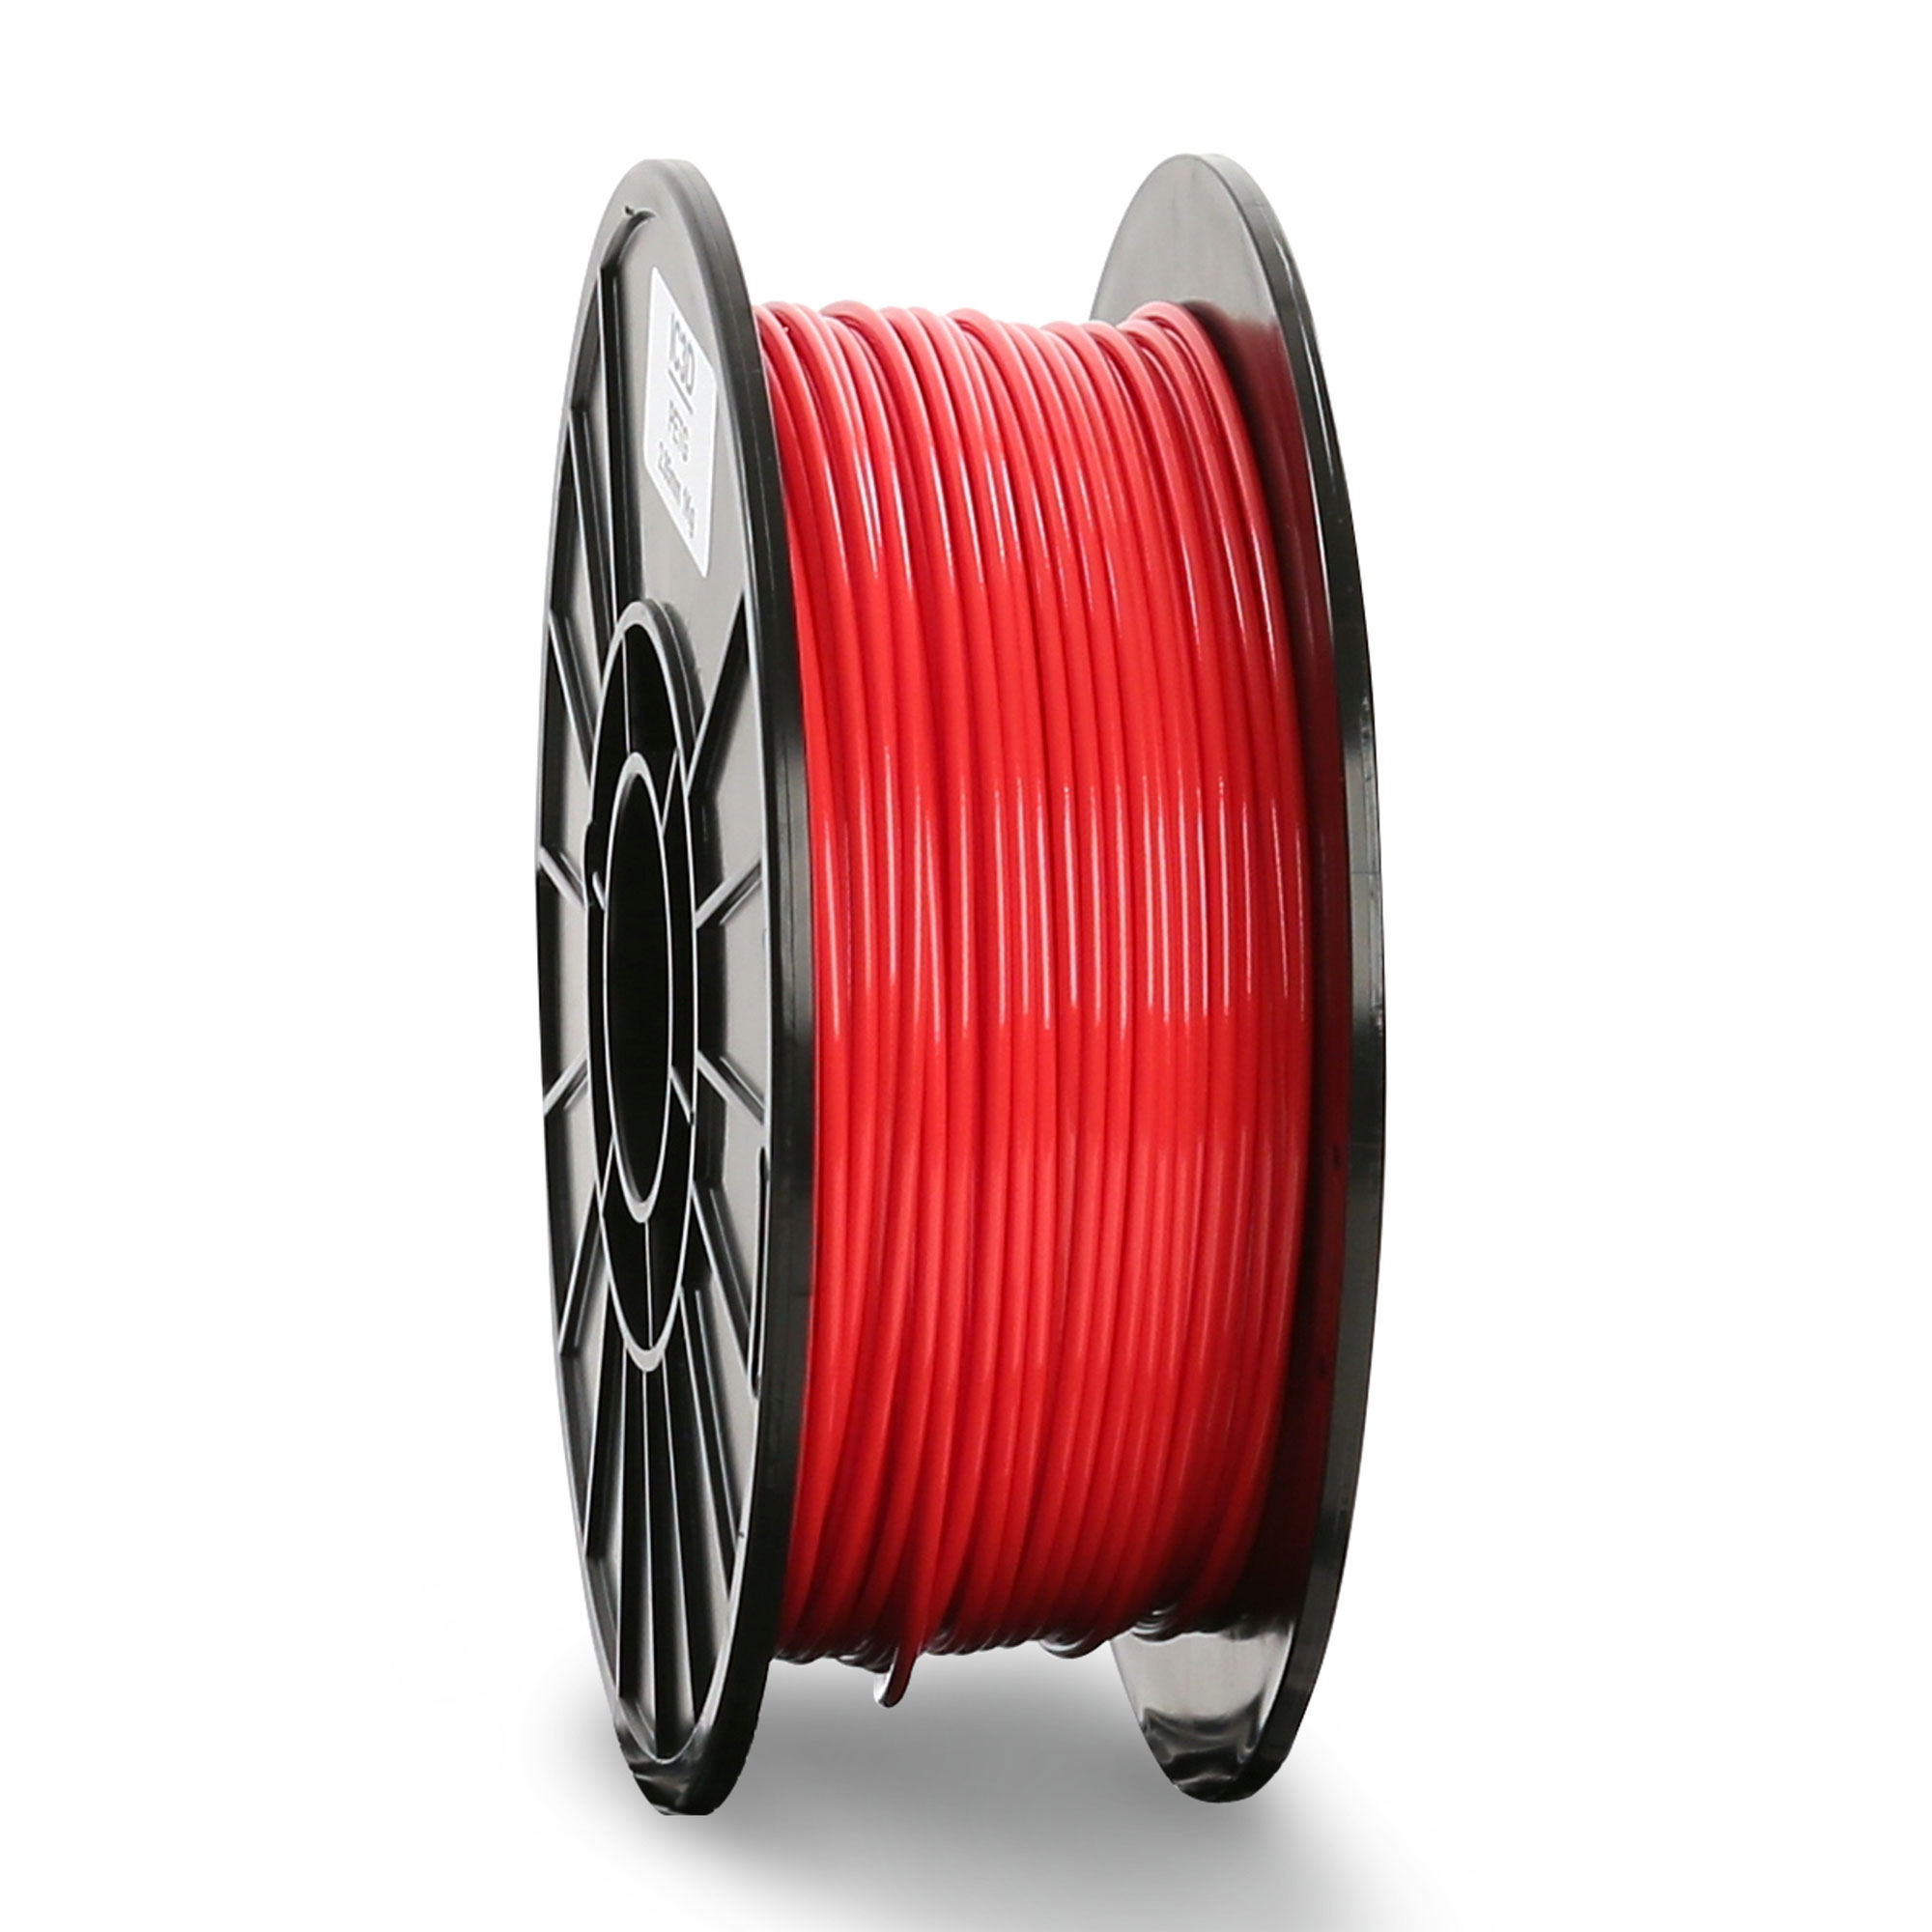 Ic3d Petg Red, 3mm Filament, 1kg